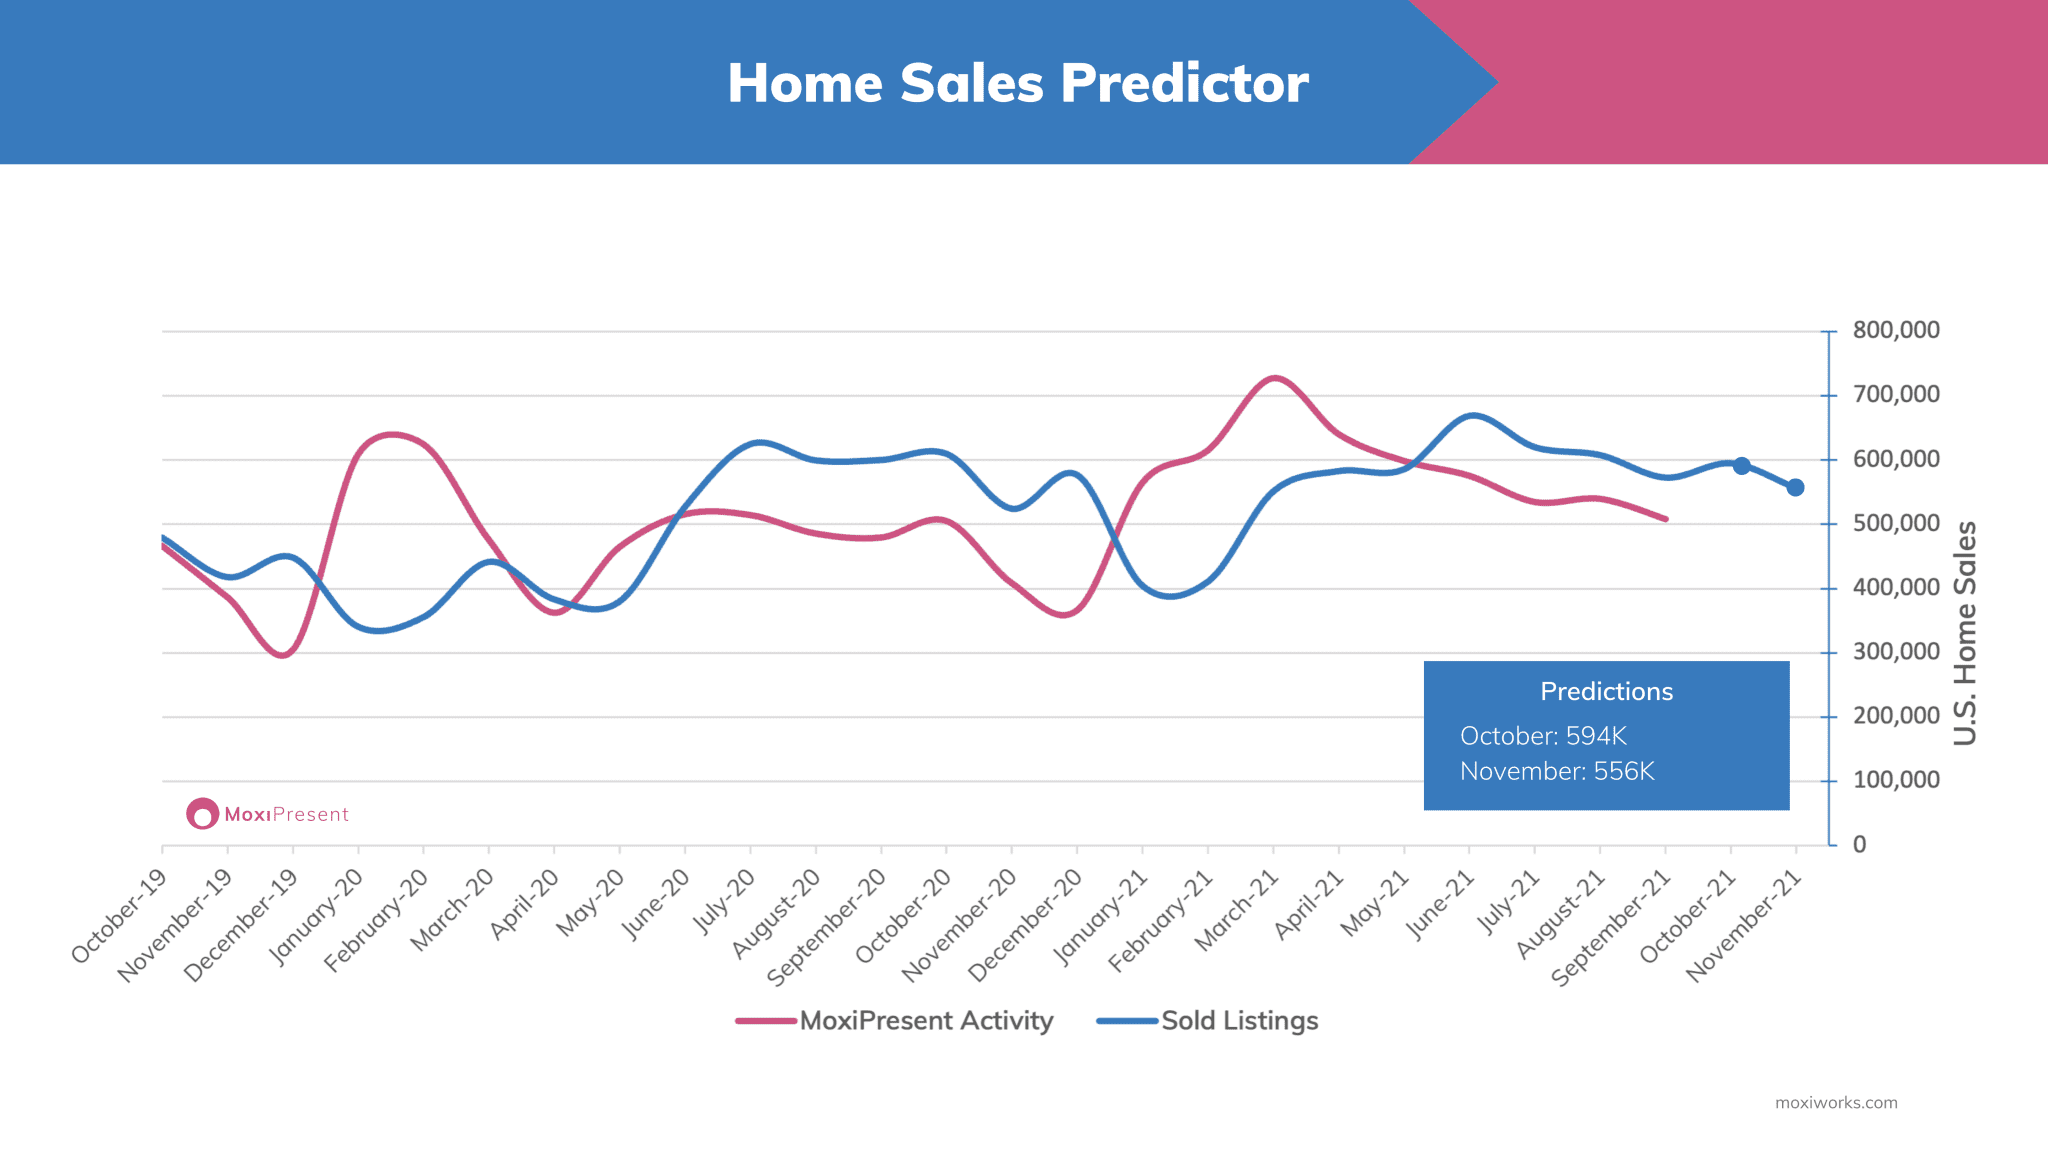 October MoxiWorks Home Sales Predictor